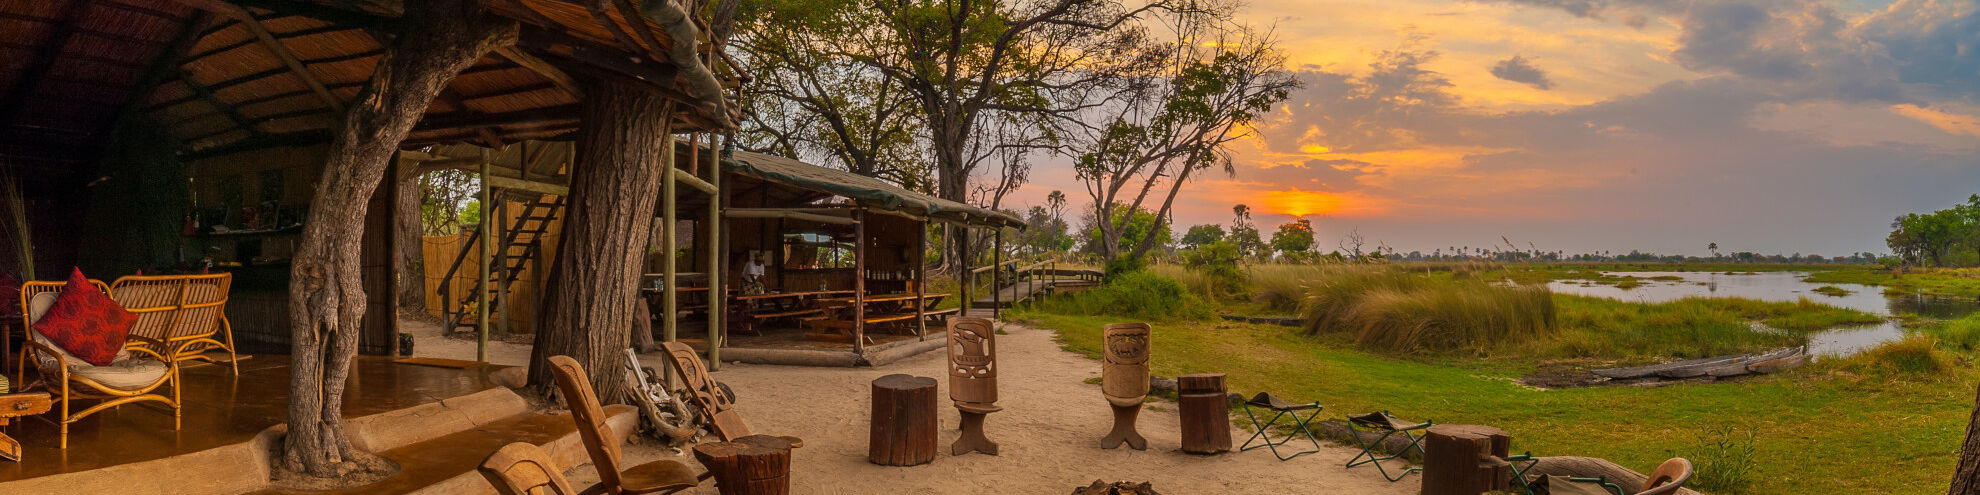 Accommodation in Moremi Game Reserve - Botswana